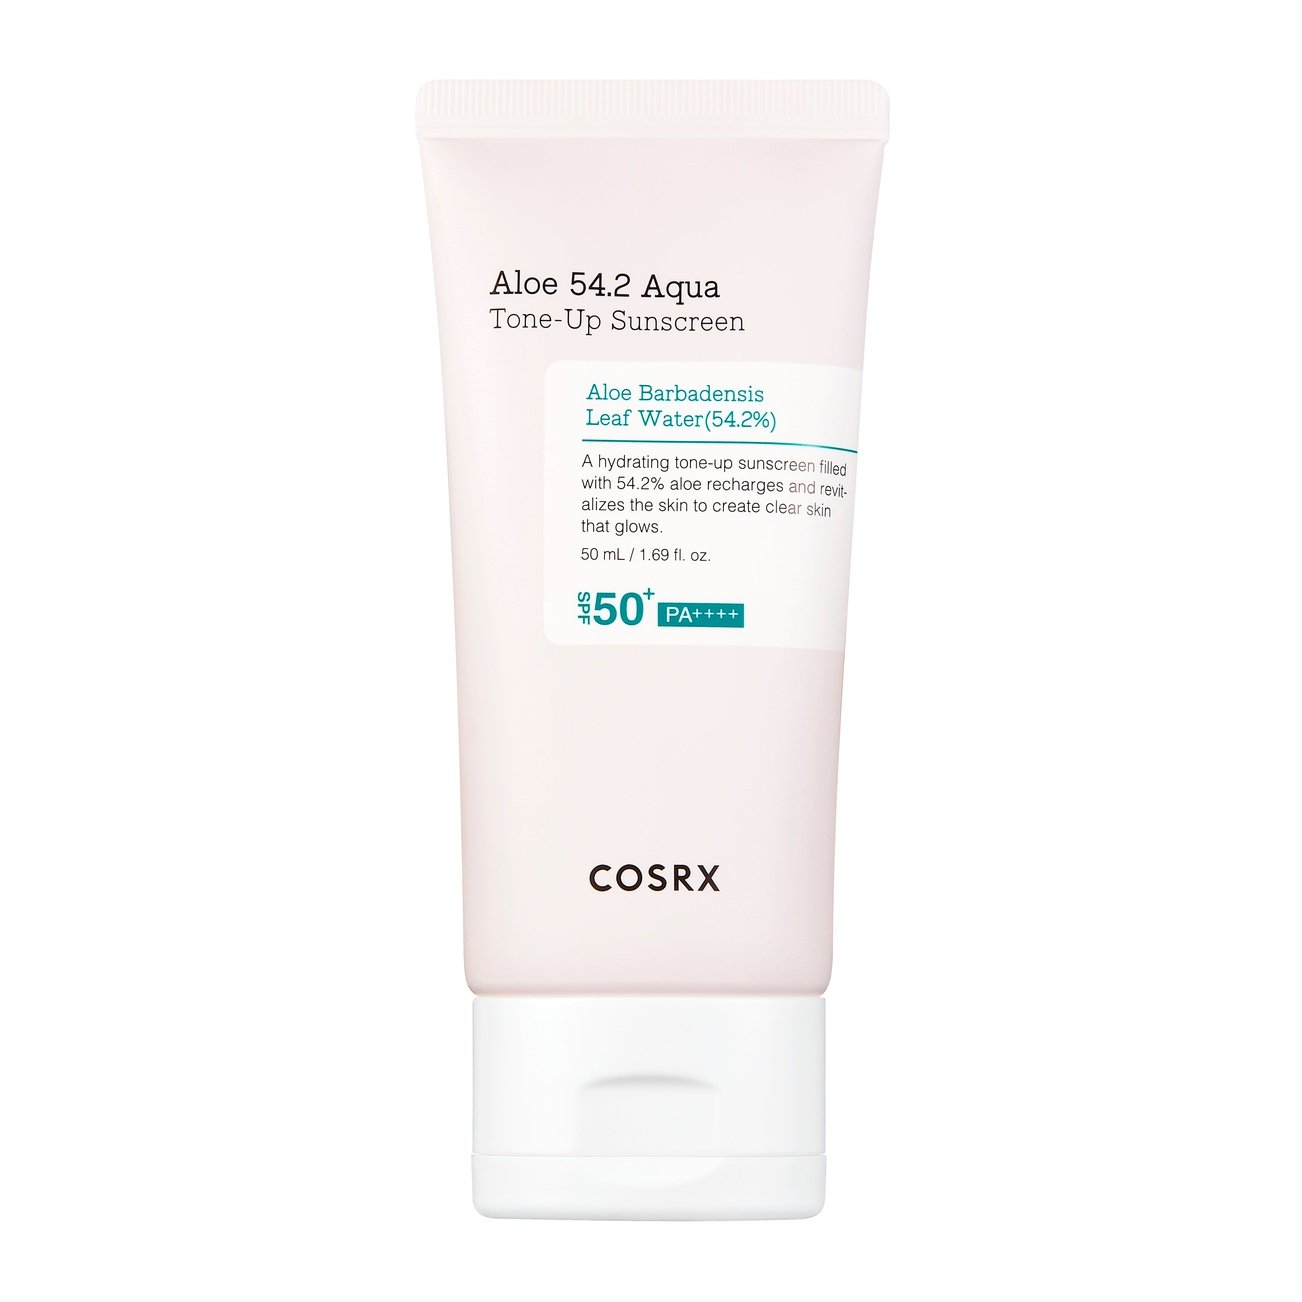 Wholesale Cosrx Aloe 54.2 Aqua Tone-Up Sunscreen | Carsha